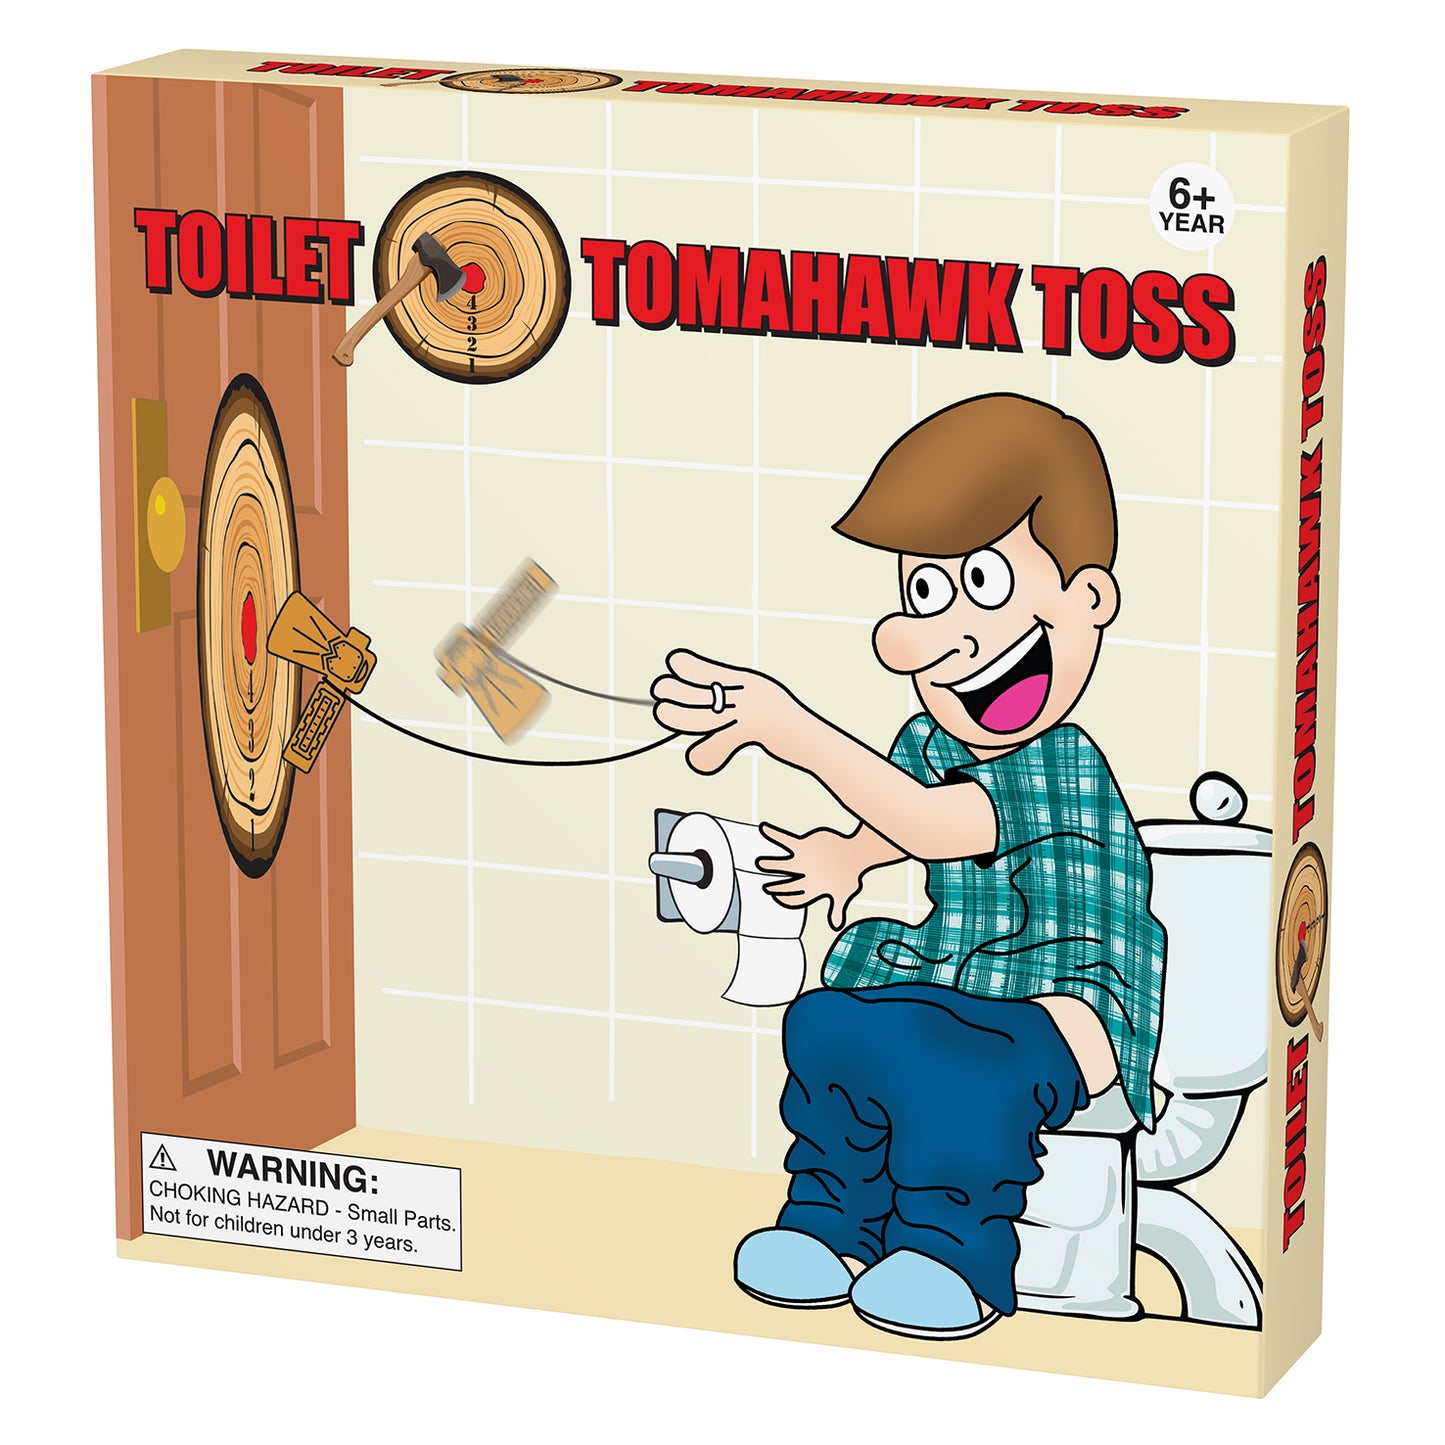 Toilet Tomahawk Toss